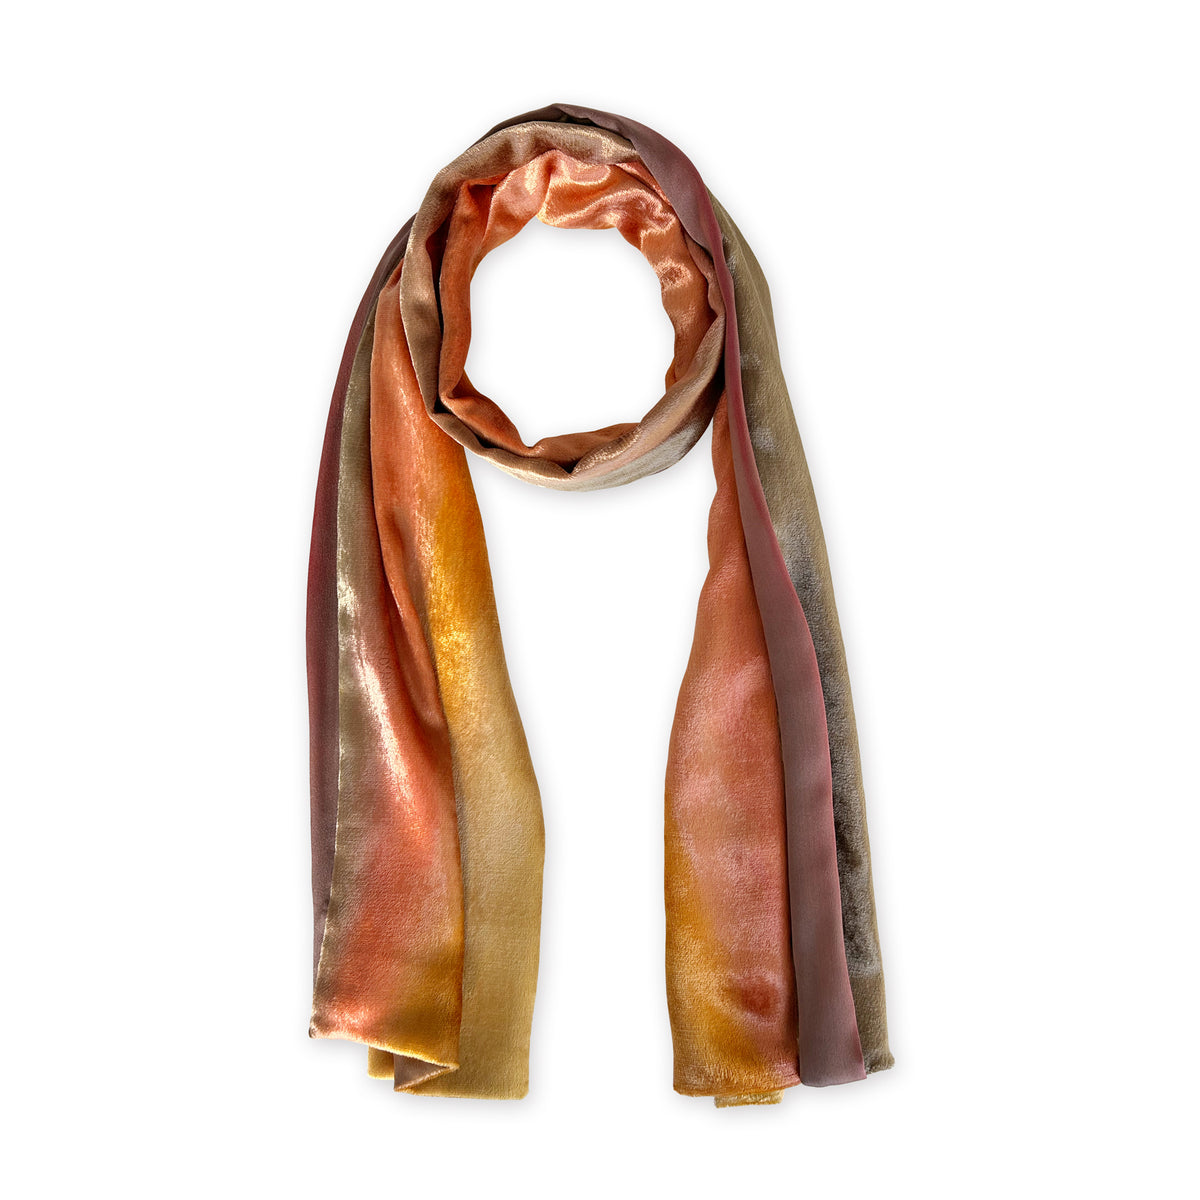 velvet-scarf-hand-painted-184x32cm-yellow-orange-red-brown-otta-italy-2347